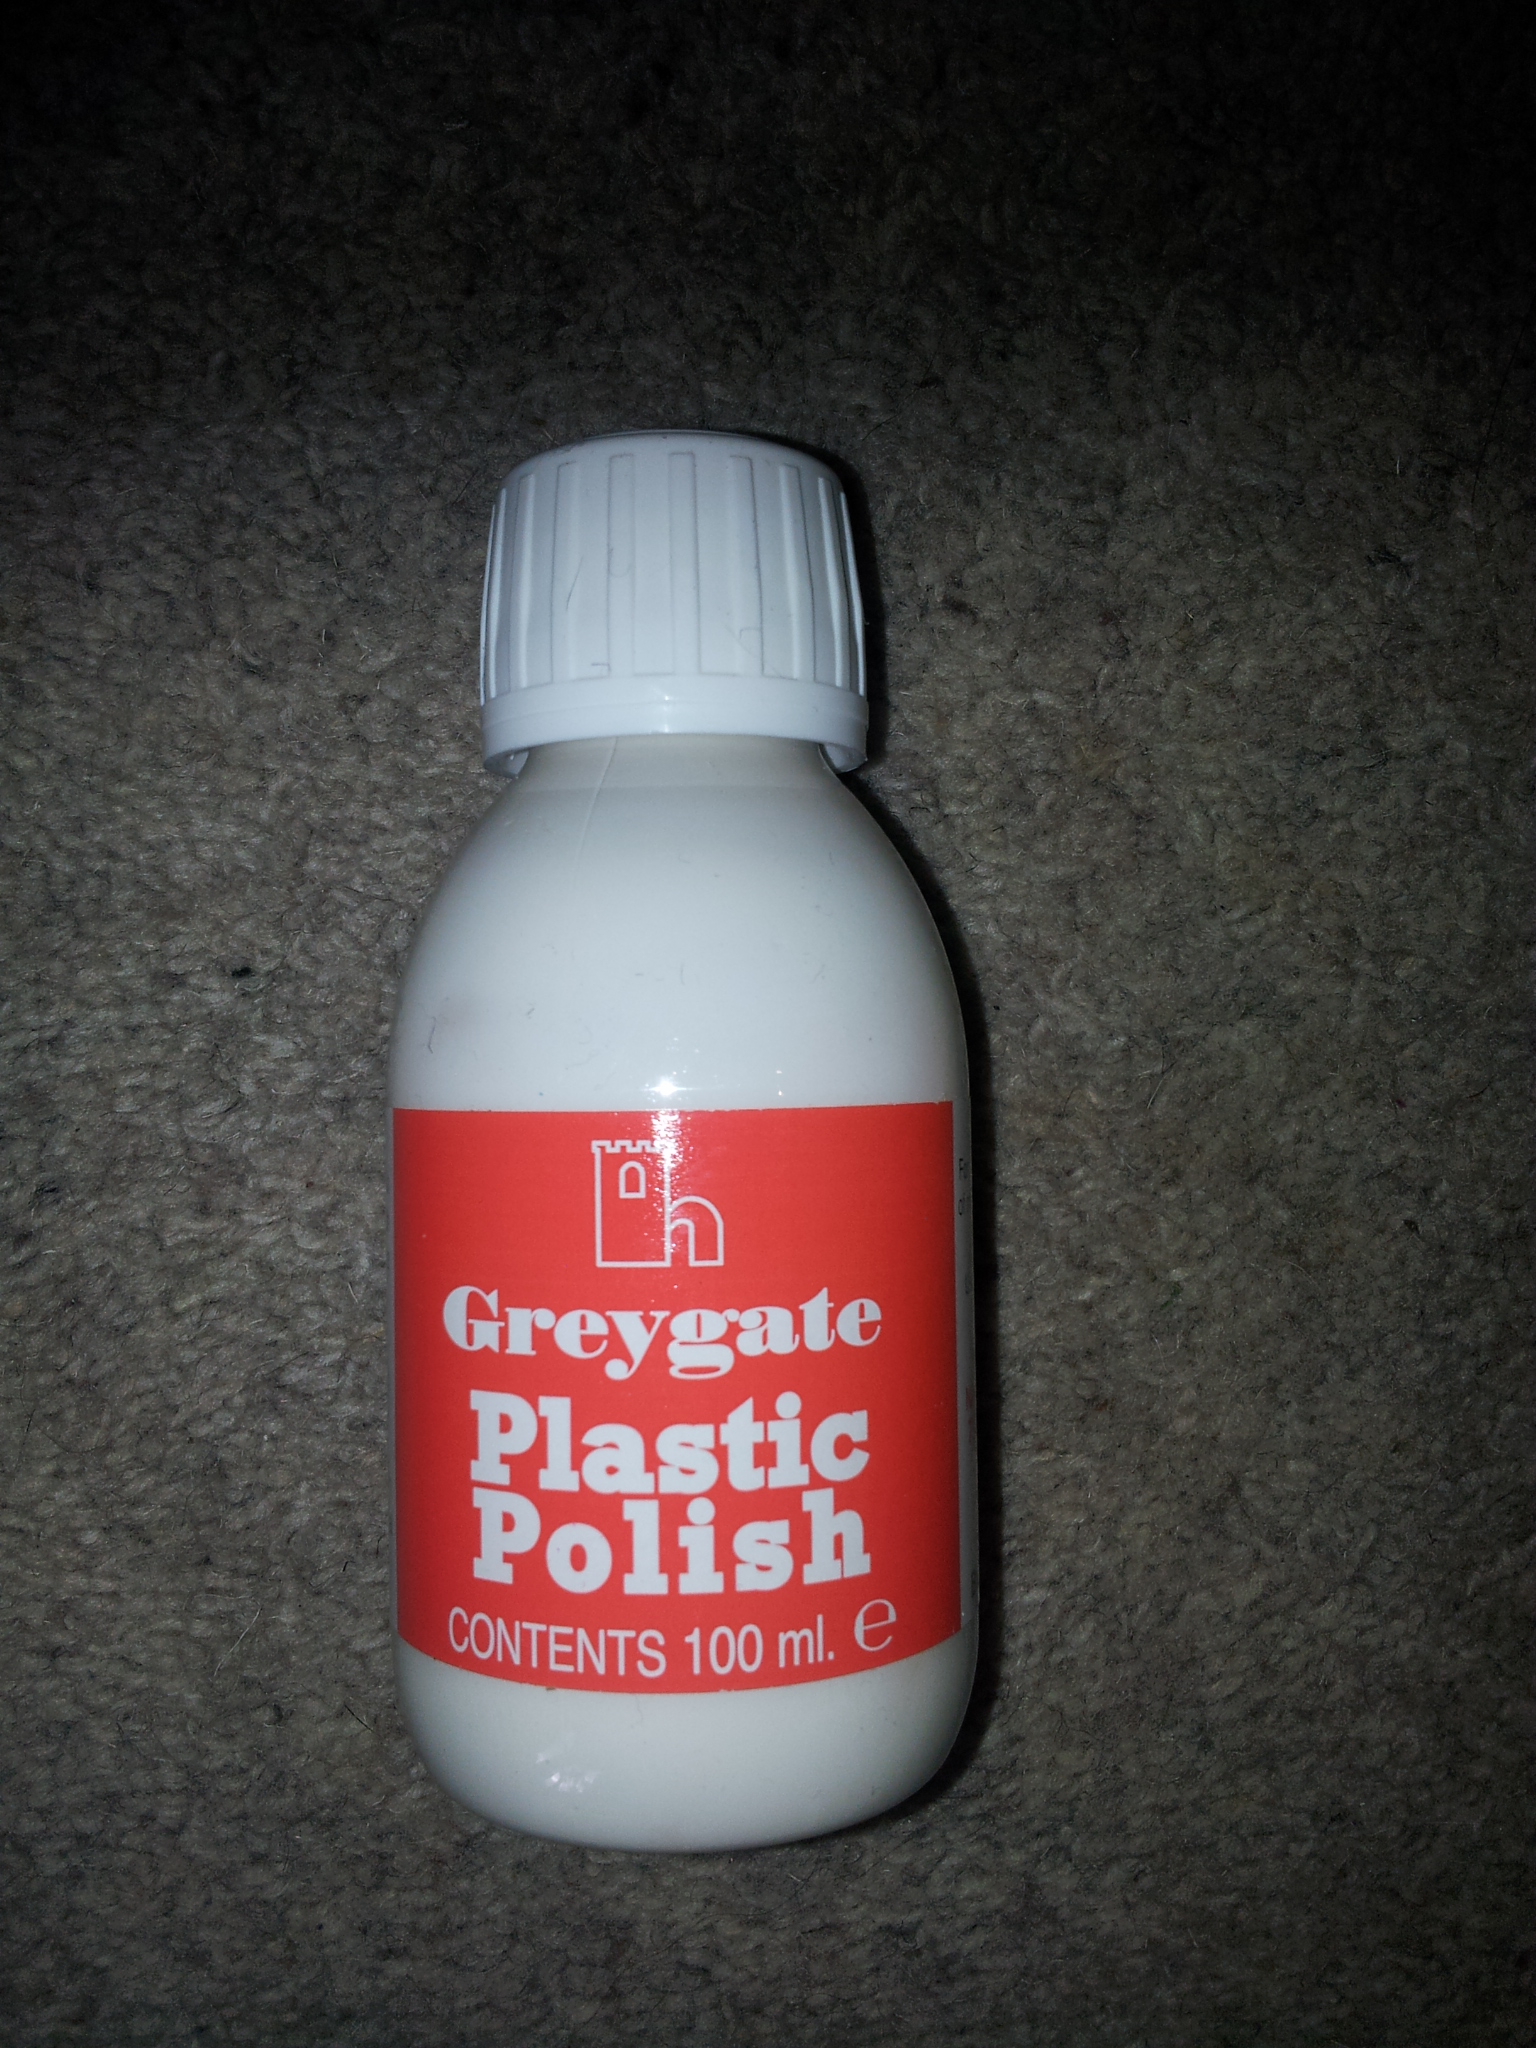 Plastic Polish (Greygate)